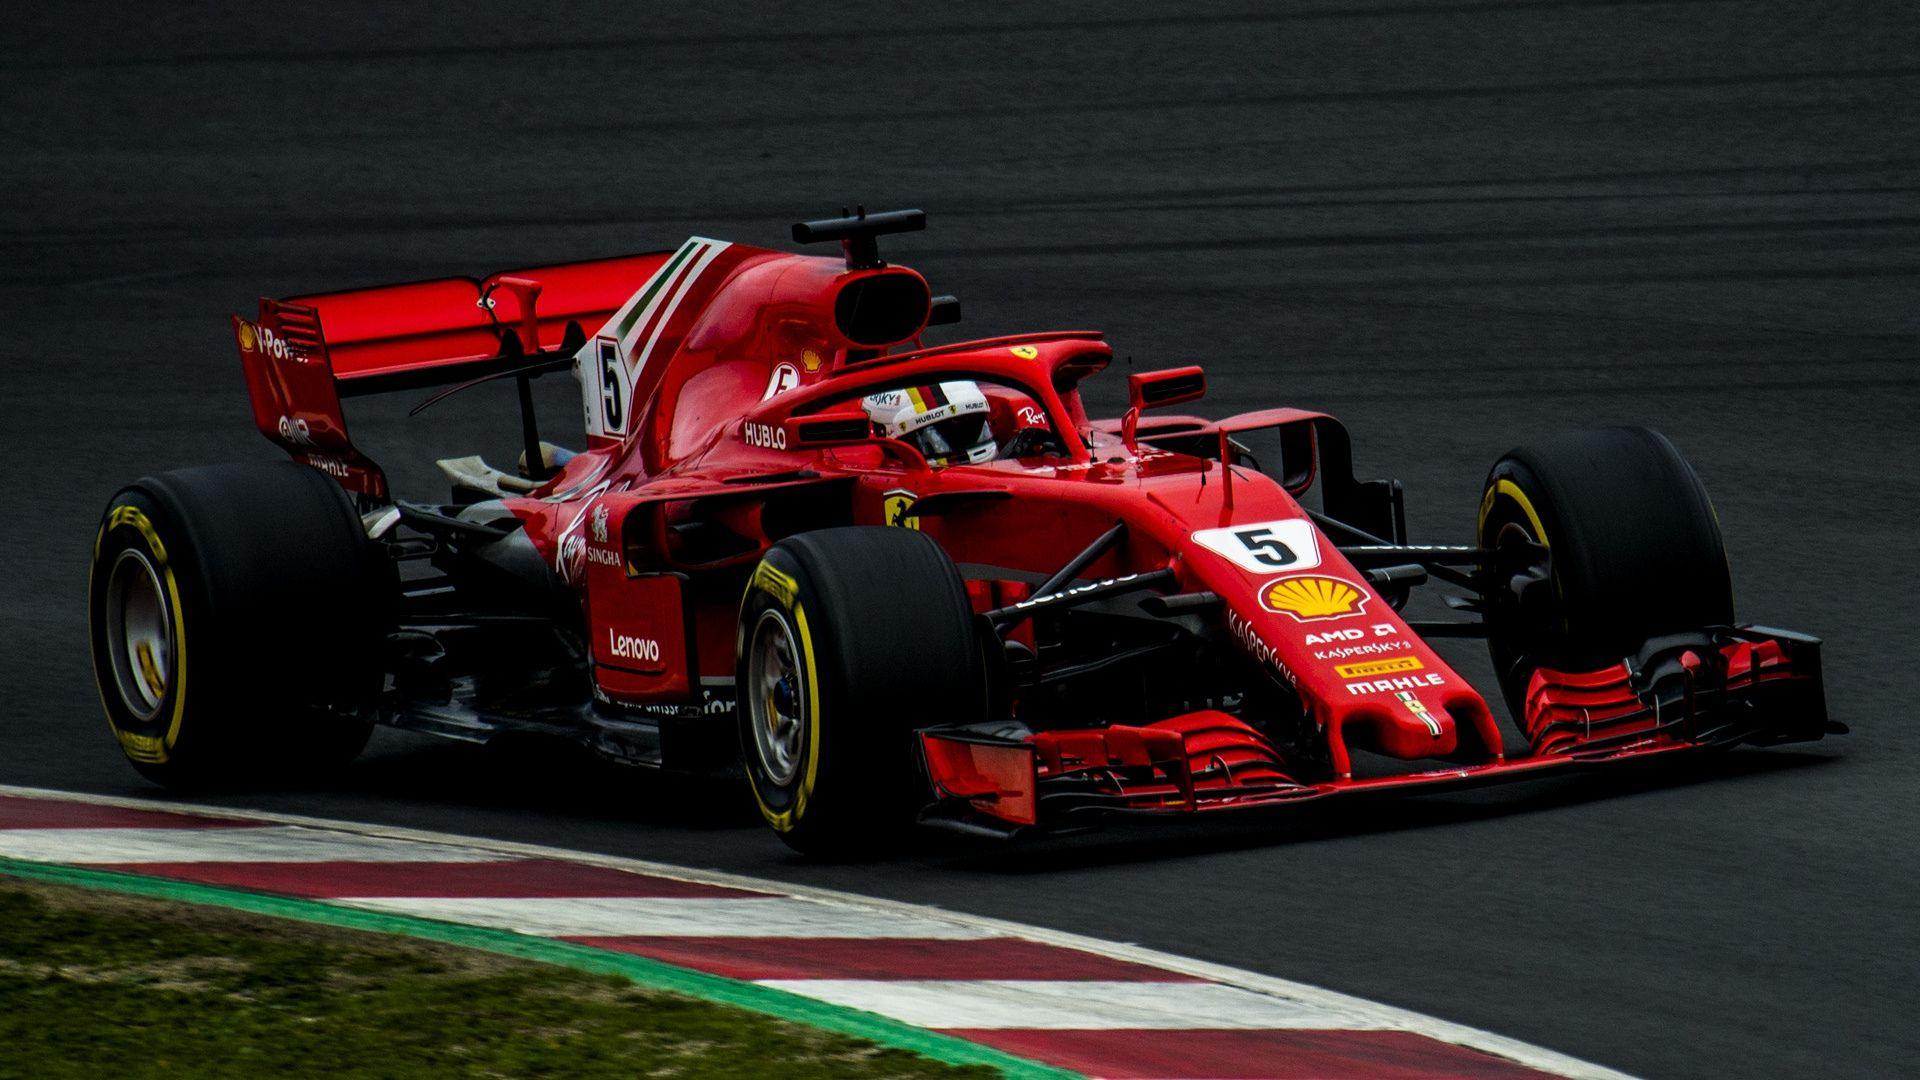 Ferrari F1 HD Wallpapers - Top Free Ferrari F1 HD Backgrounds ...